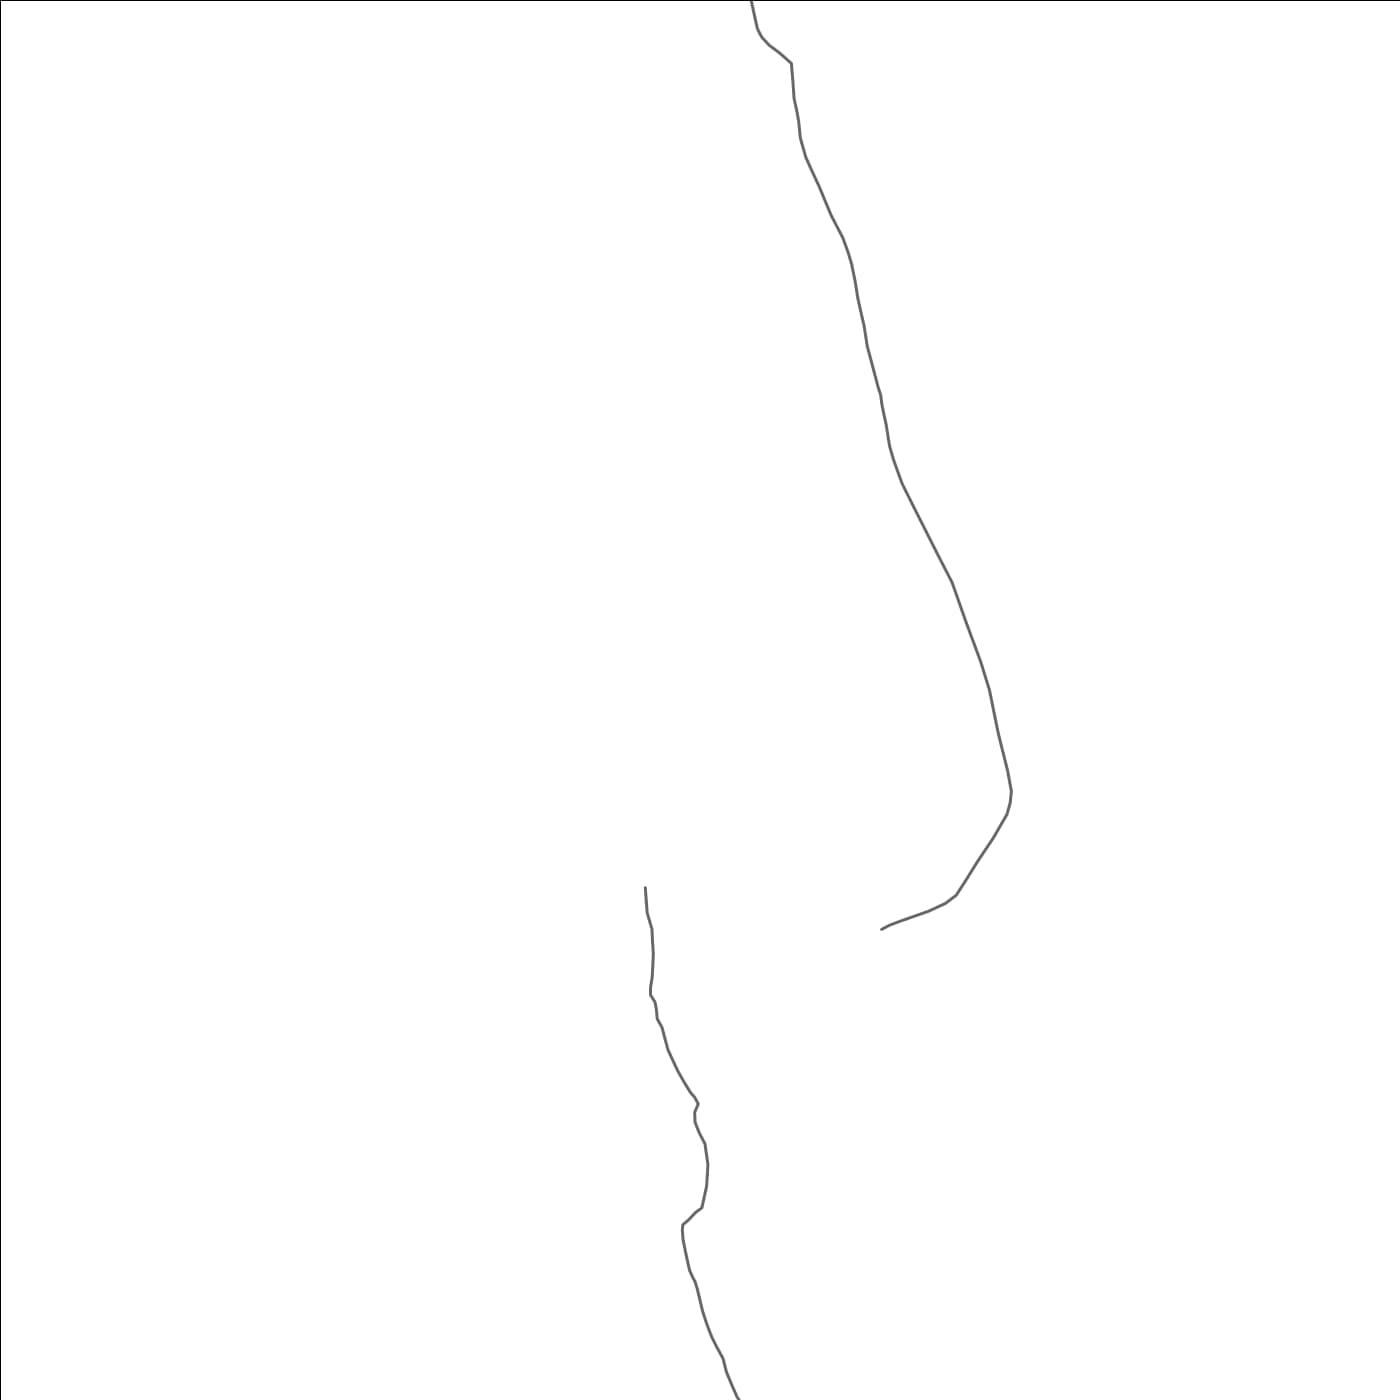 ROAD MAP OF TAKU, KIRIBATI BY MAPBAKES